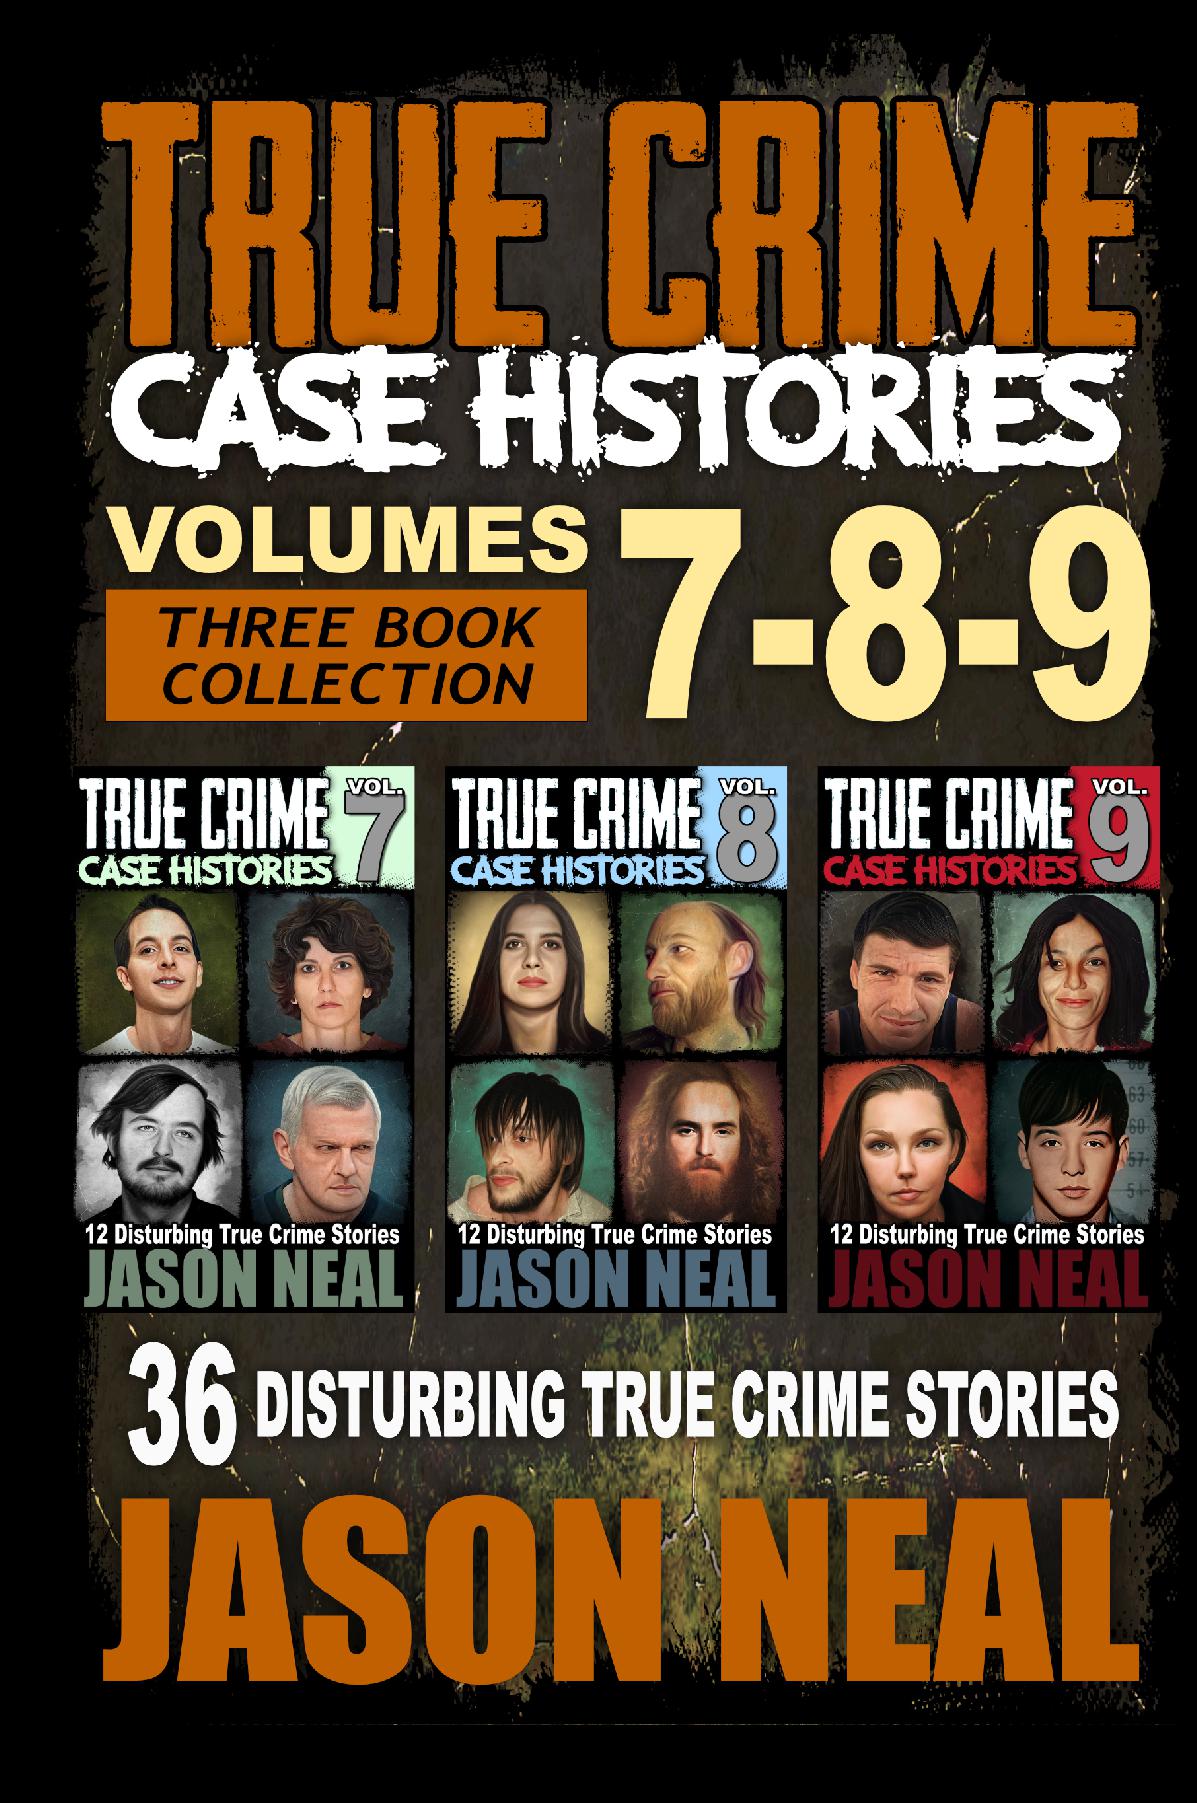 True Crime Case Histories - (Books 7, 8, & 9) (HARDCOVER)